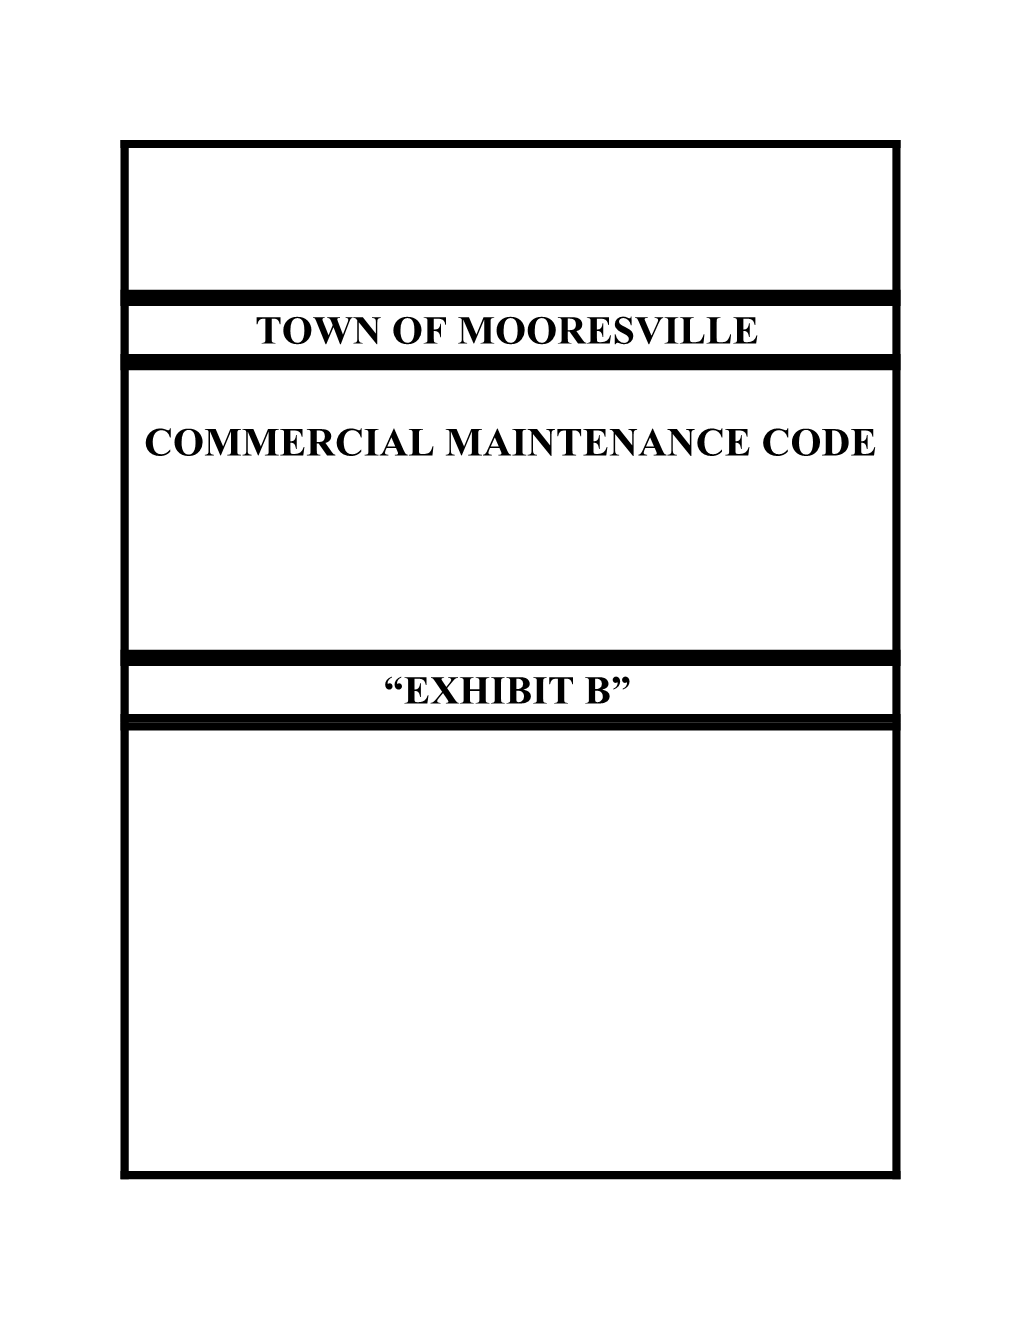 Commercial Maintenance Code